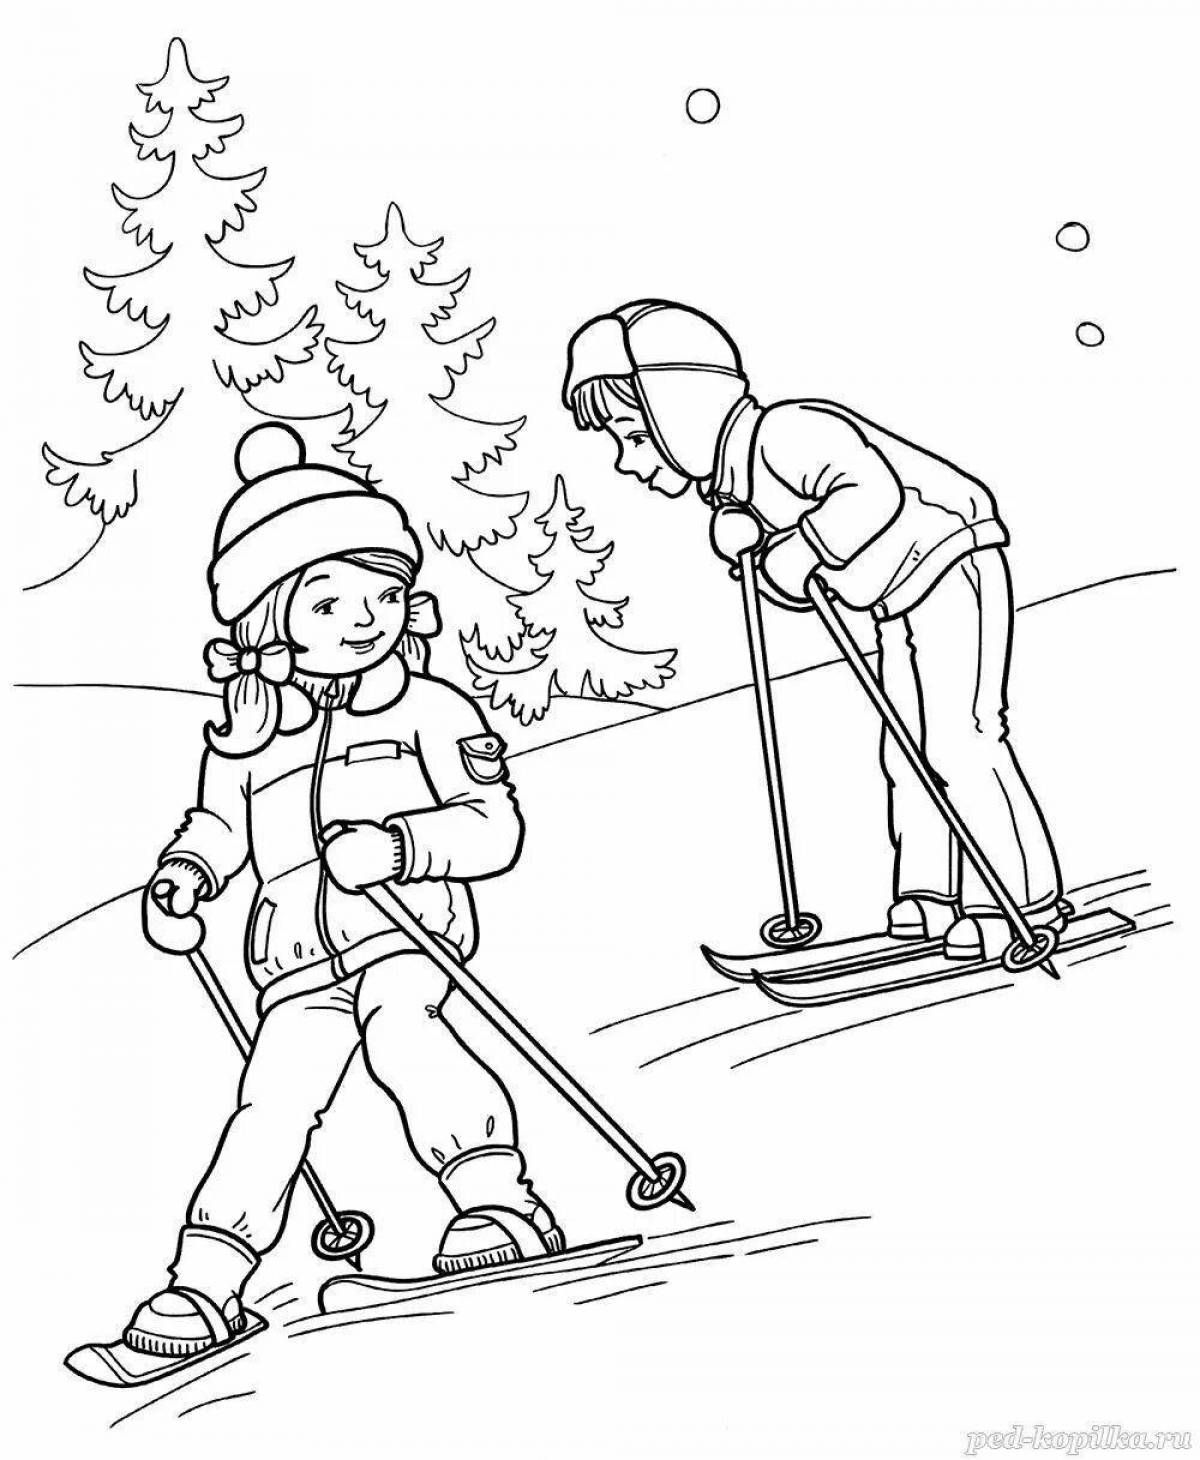 Serene ski coloring page